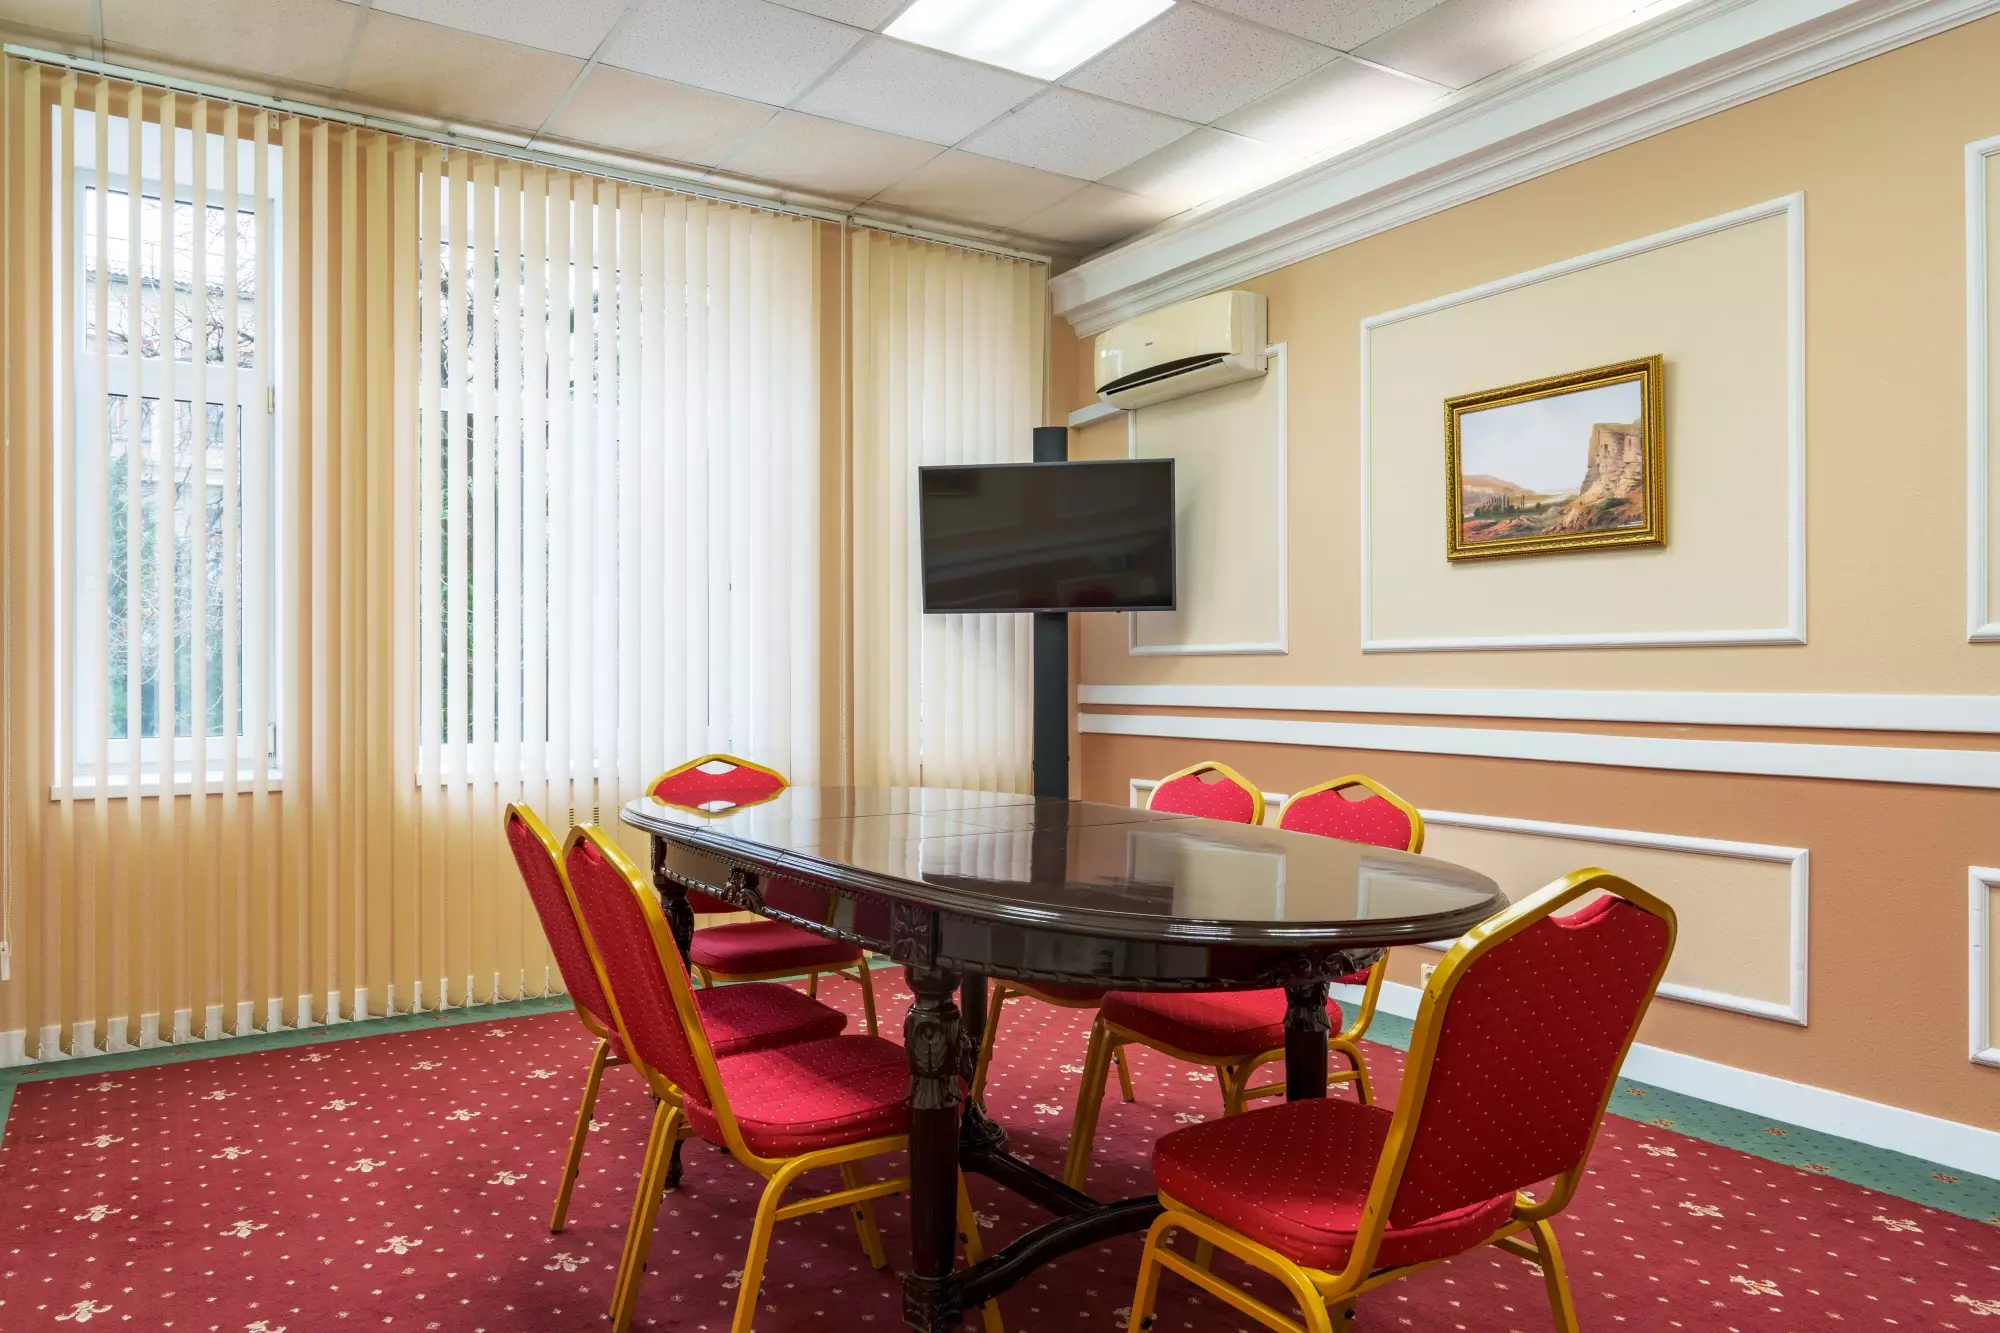 Конференц-сервис в гостинице «Симферополь» - Комната переговоров №2